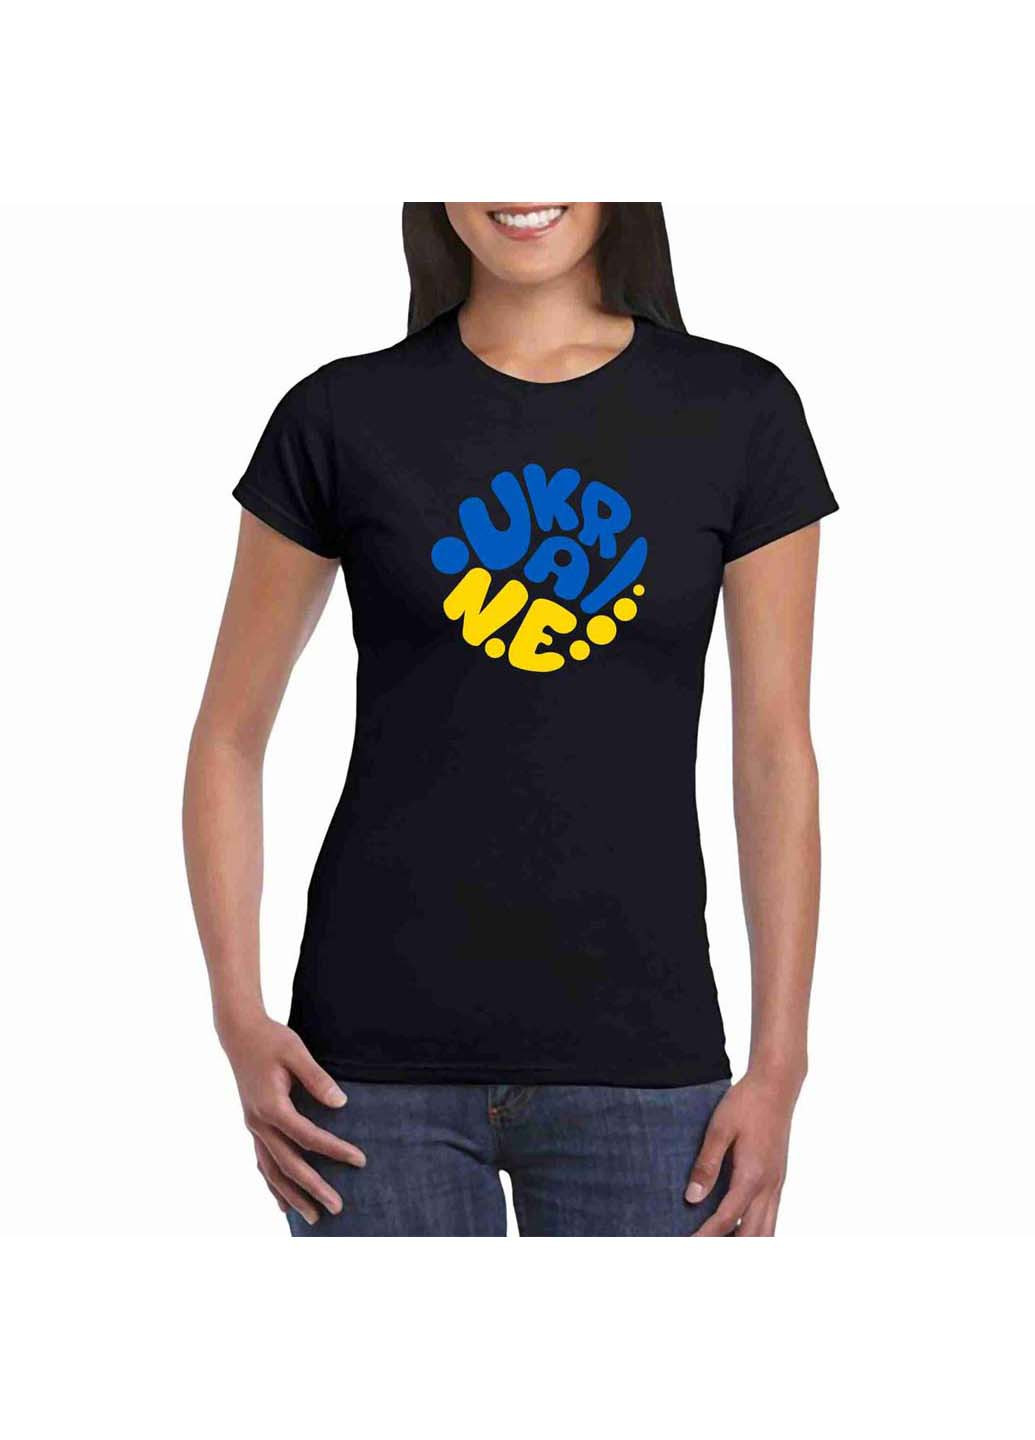 Черная футболка ukraine украина push it Кавун